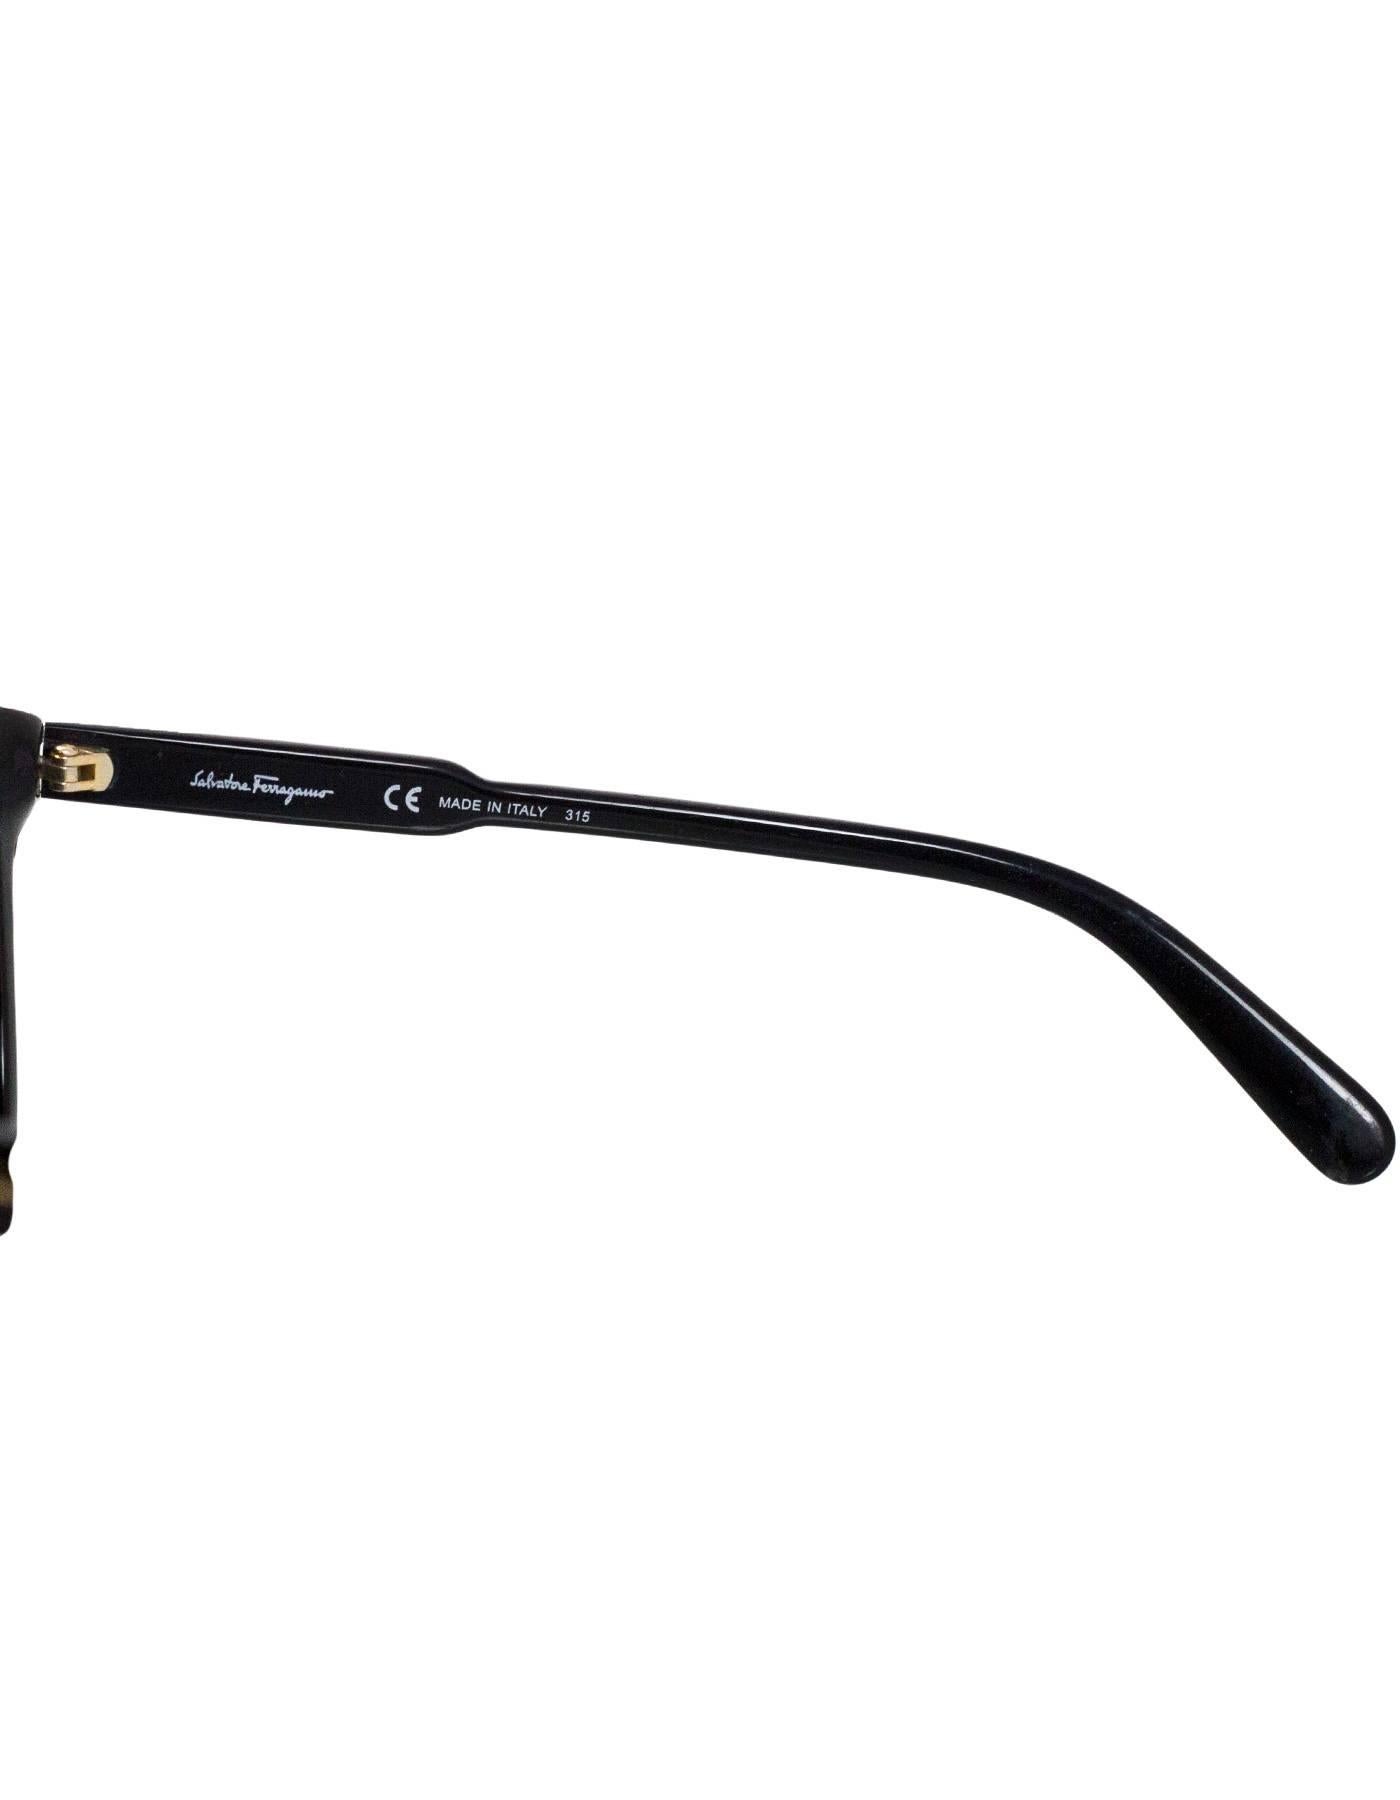 Salvatore Ferragamo Black Resin Sunglasses with Case 1